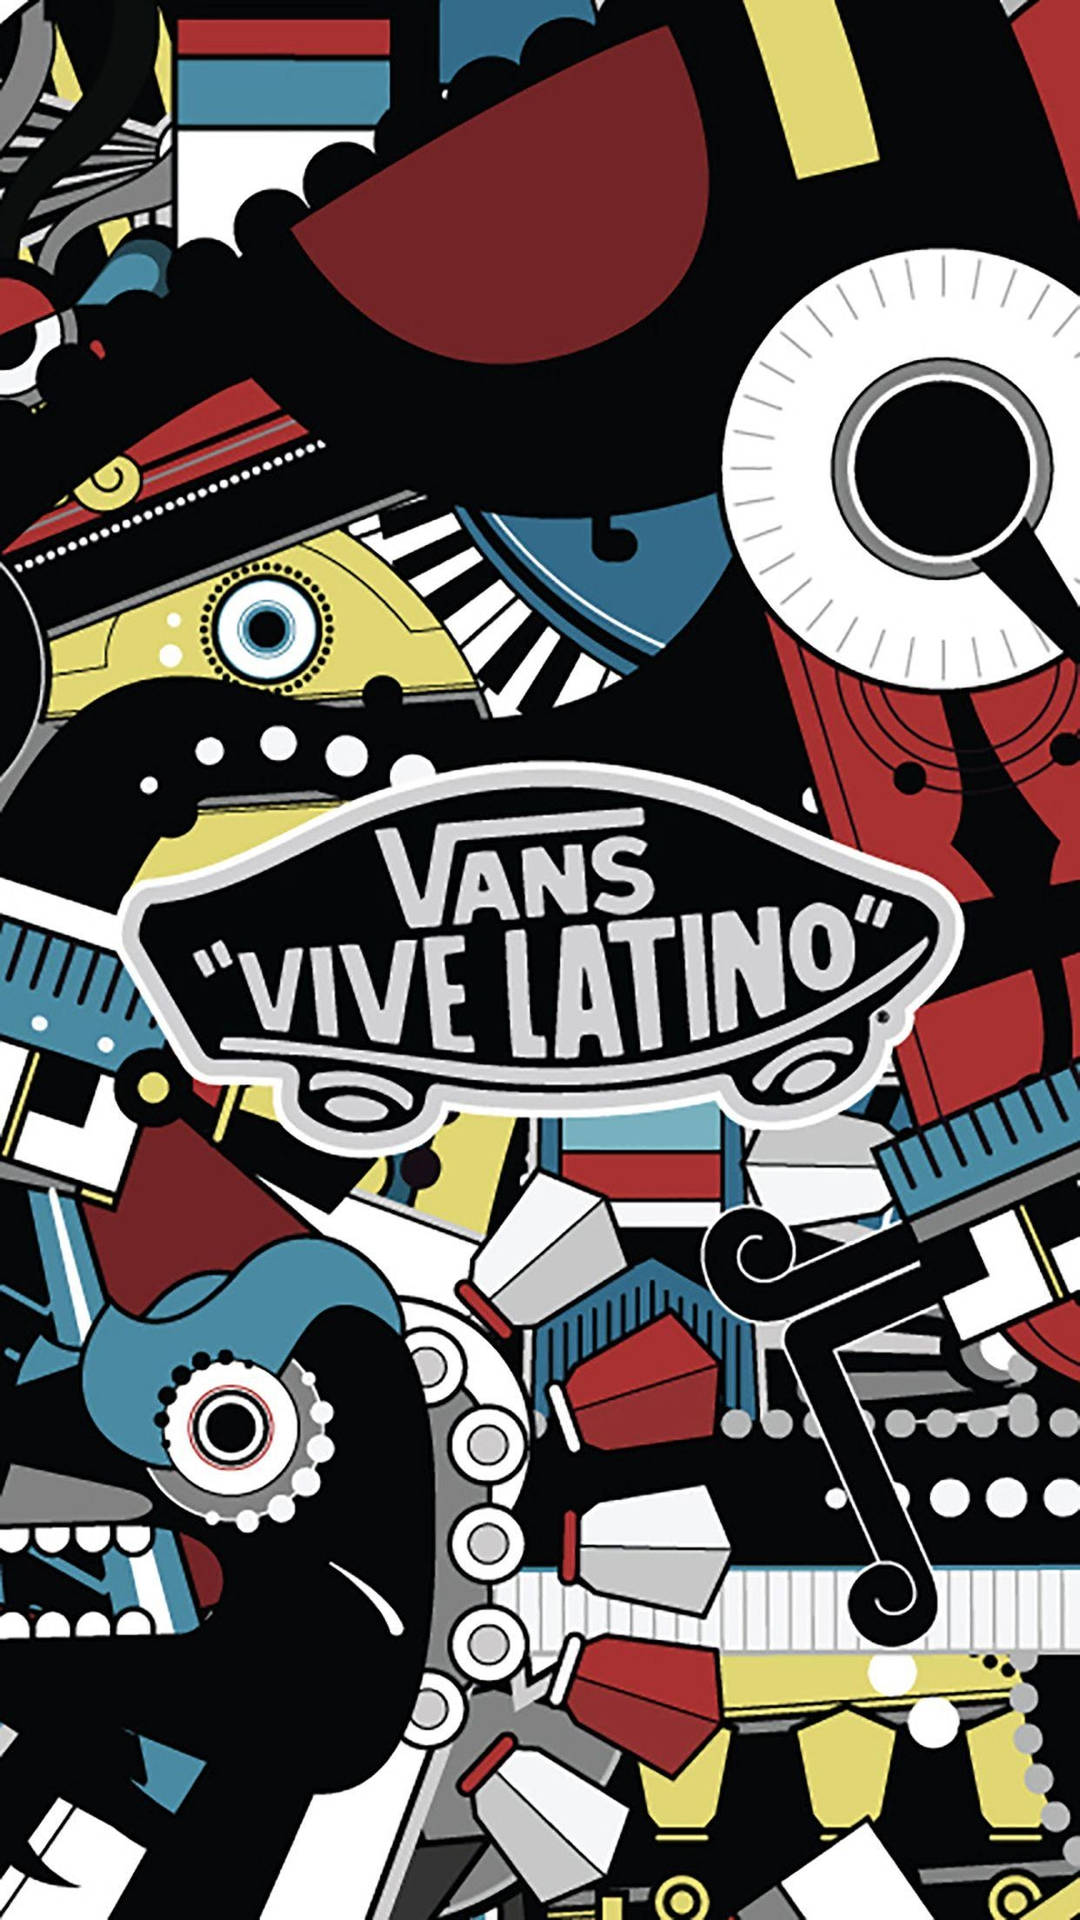 Vanslogotypen Vive Latino. Wallpaper